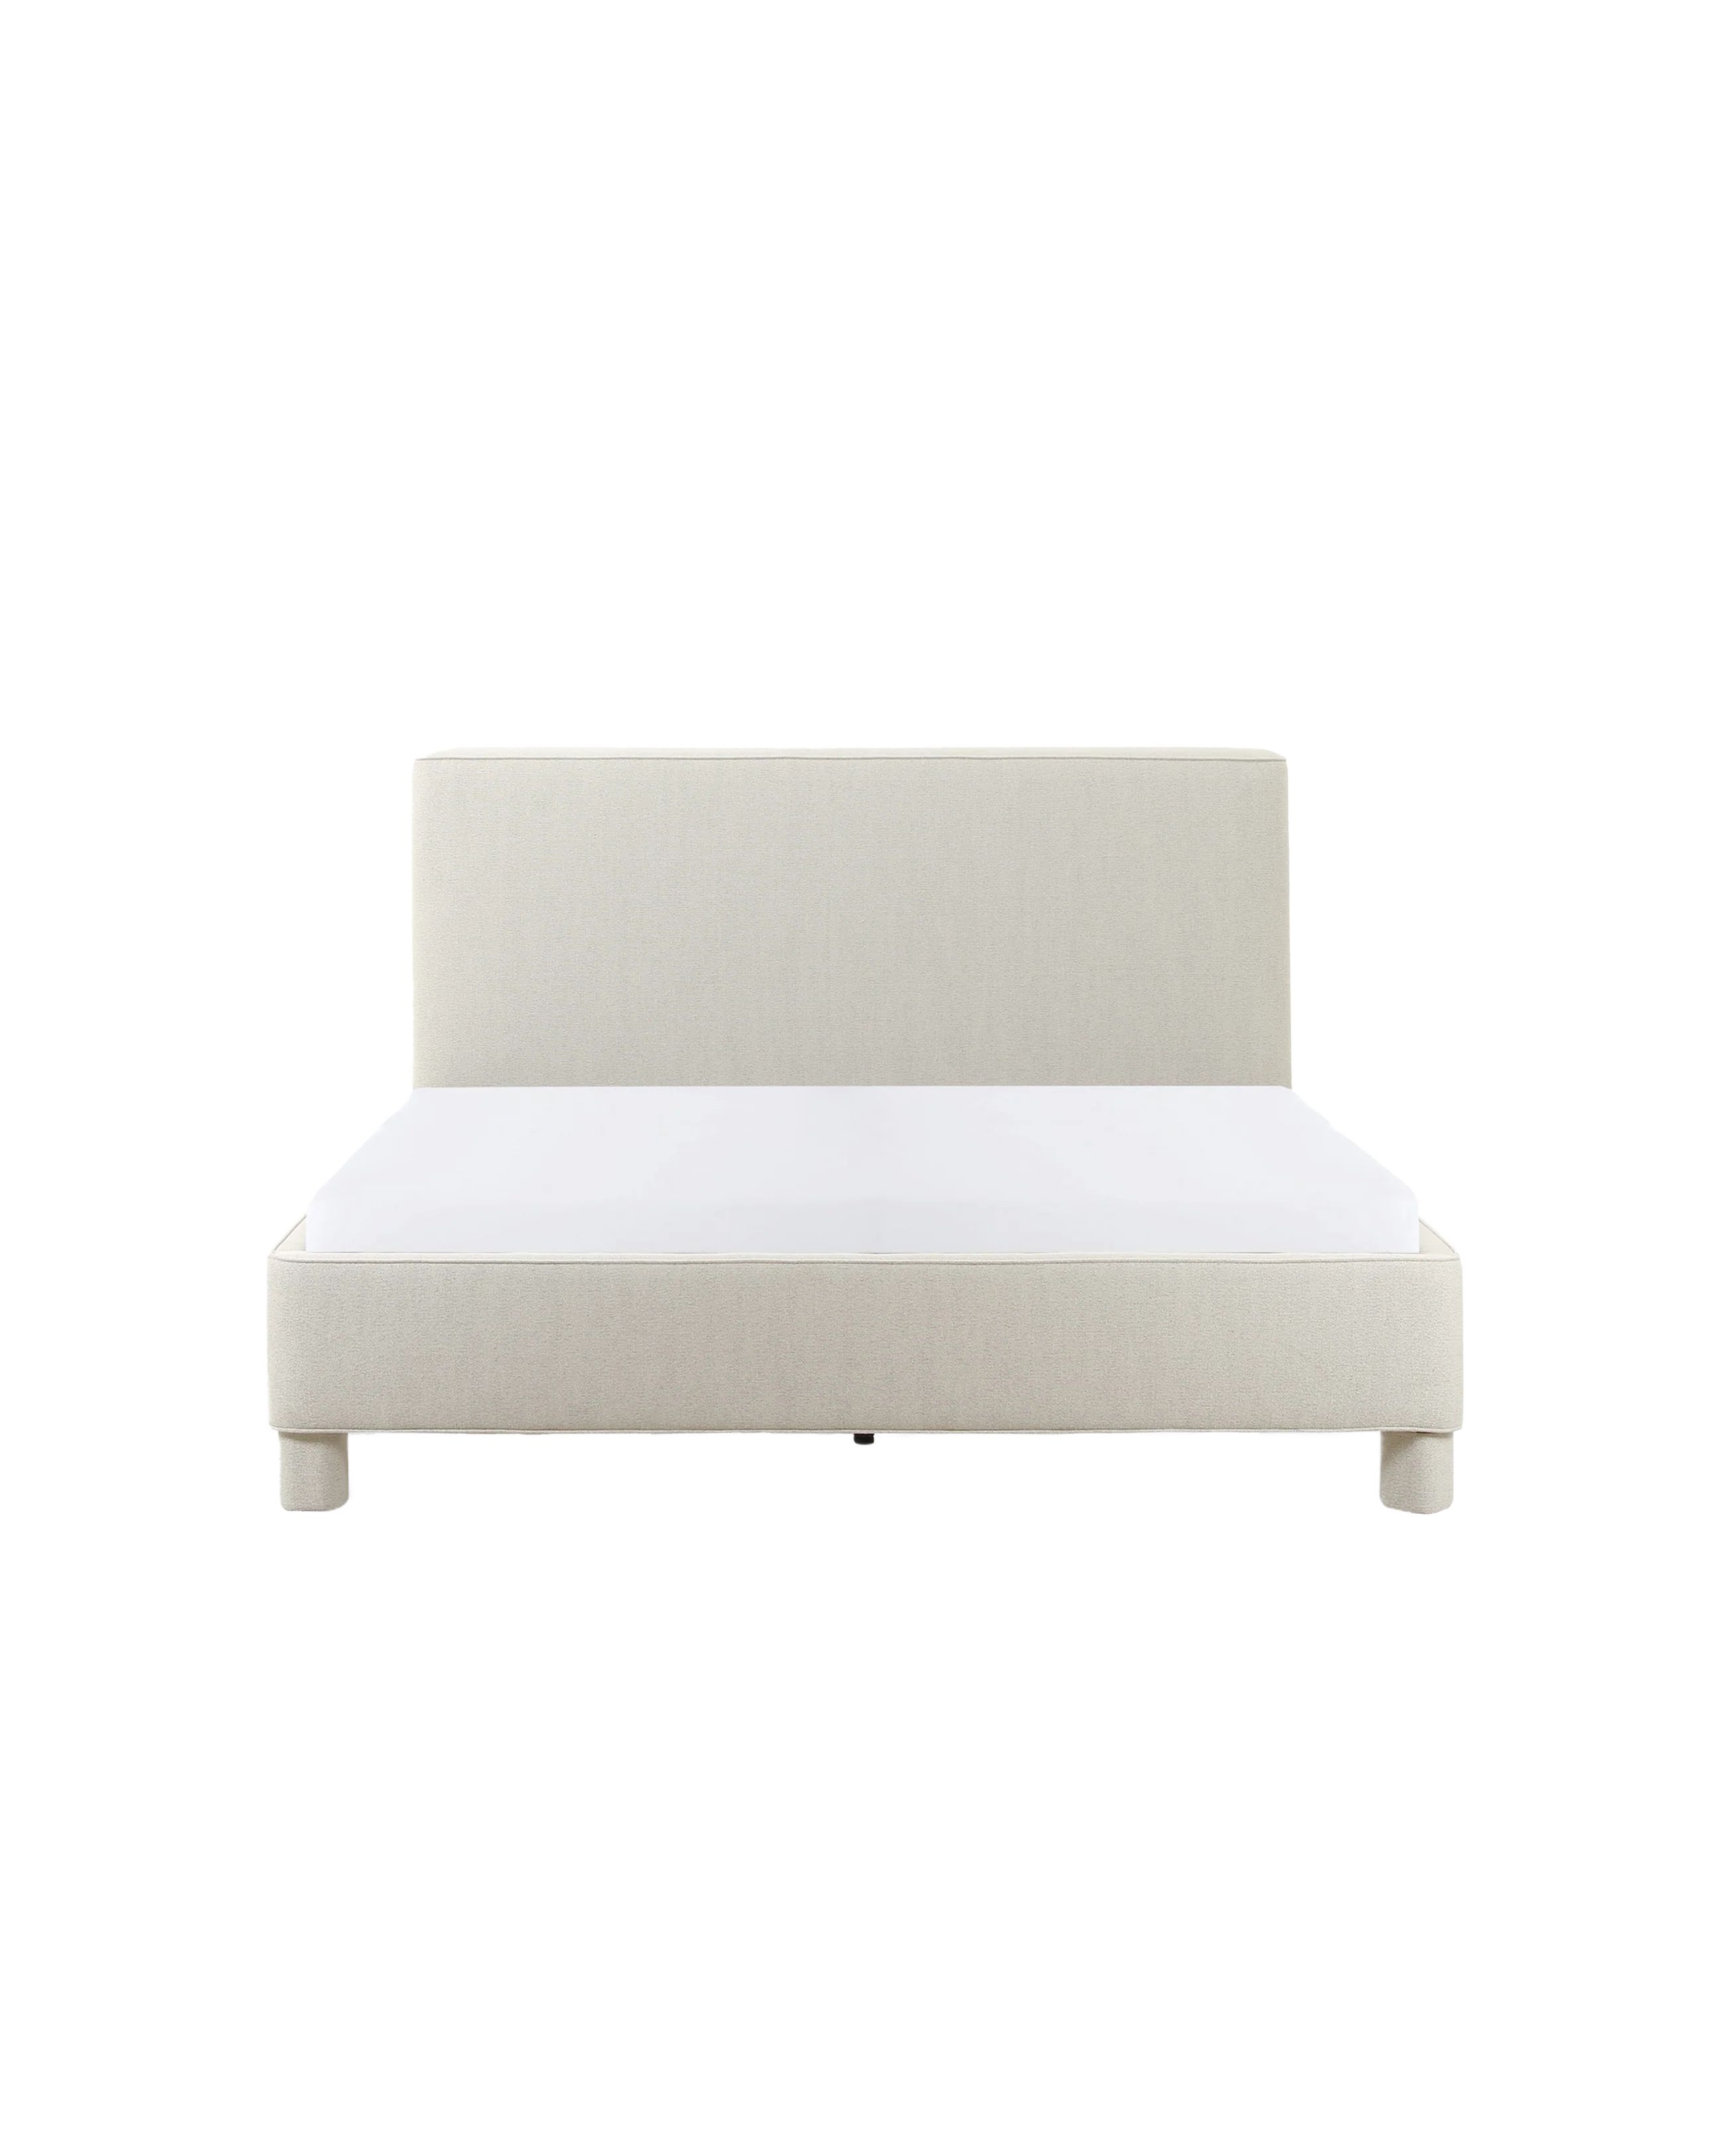 CLAUDE PLATFORM BED | Off-White Palette